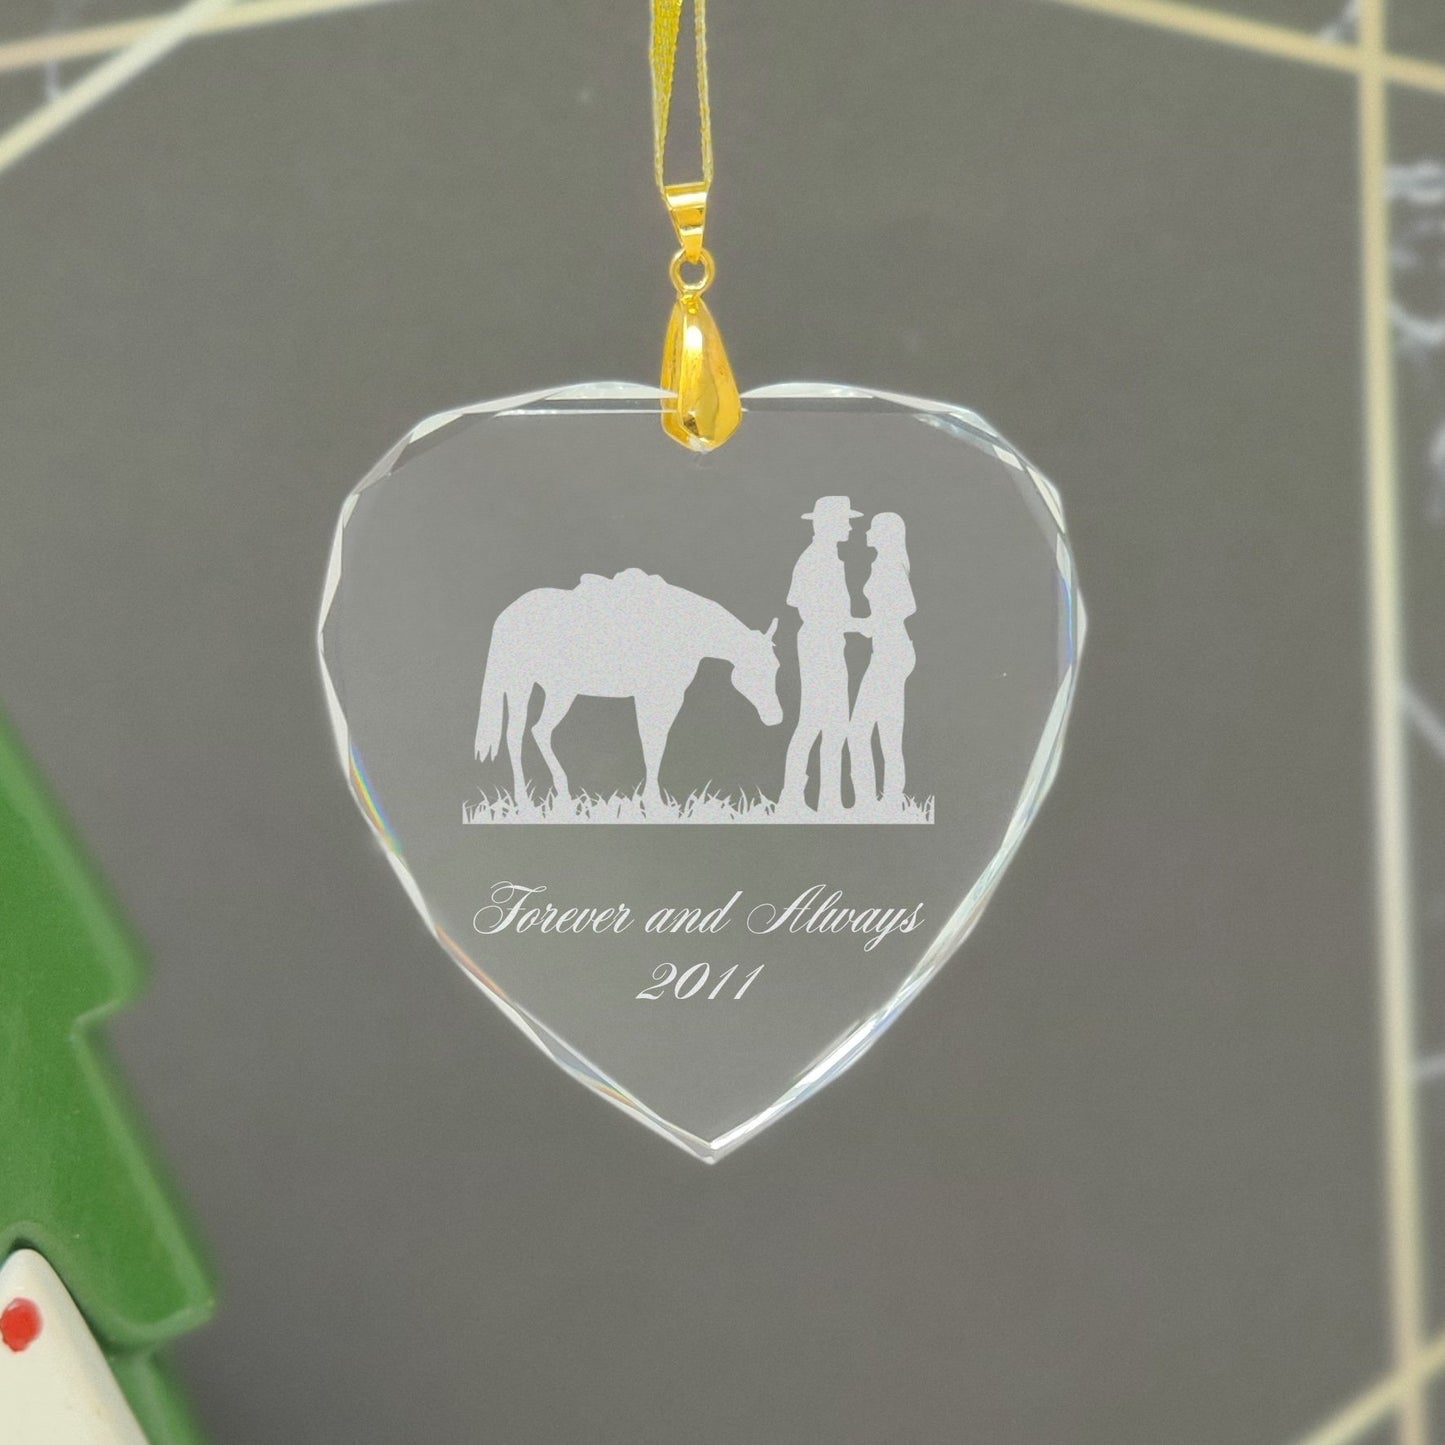 LaserGram Christmas Ornament, World's Greatest Boyfriend, Personalized Engraving Included (Heart Shape)